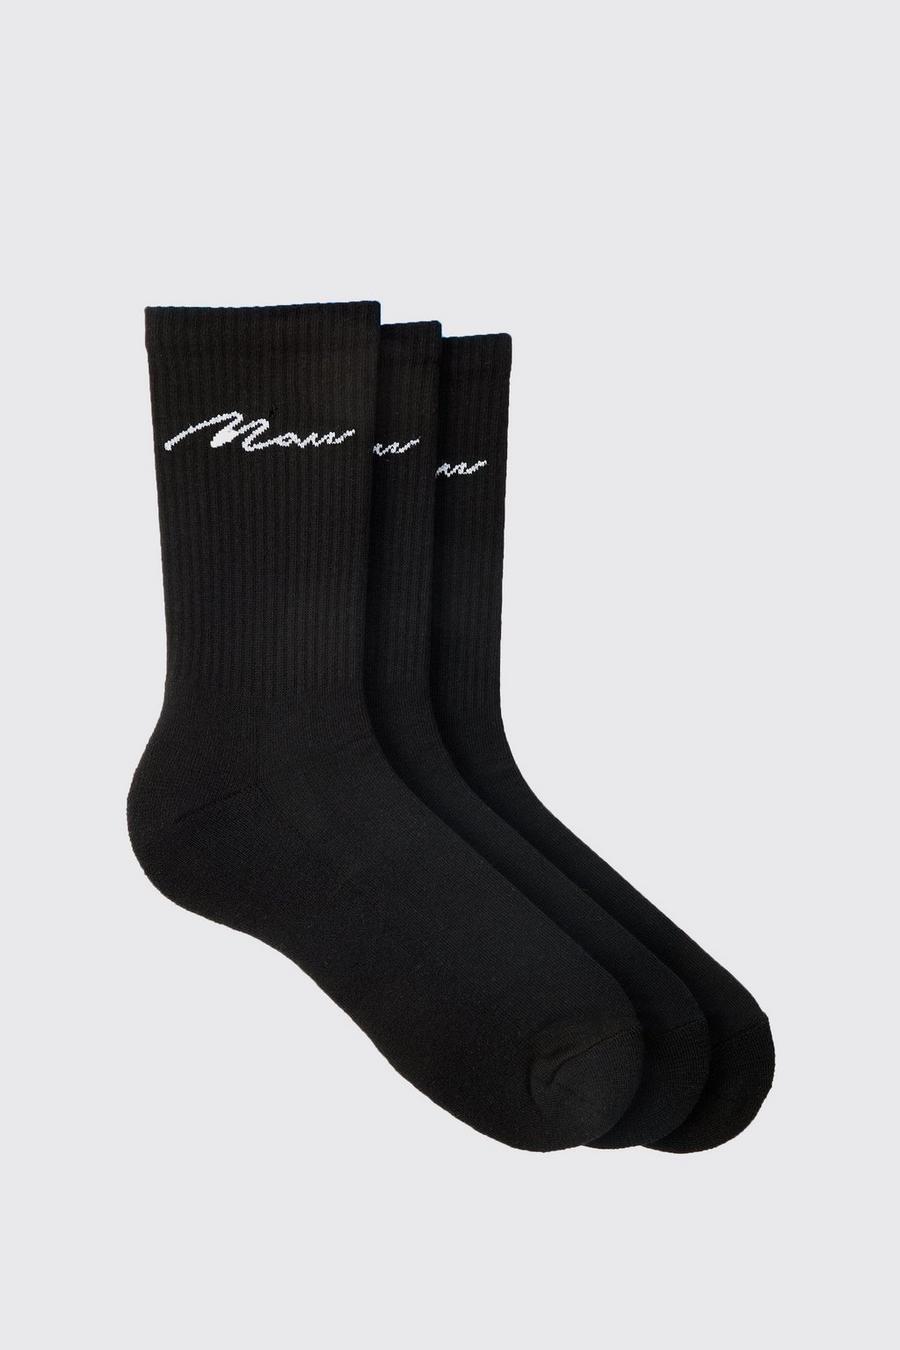 Pack de 3 pares de calcetines deportivos con firma MAN, Black image number 1